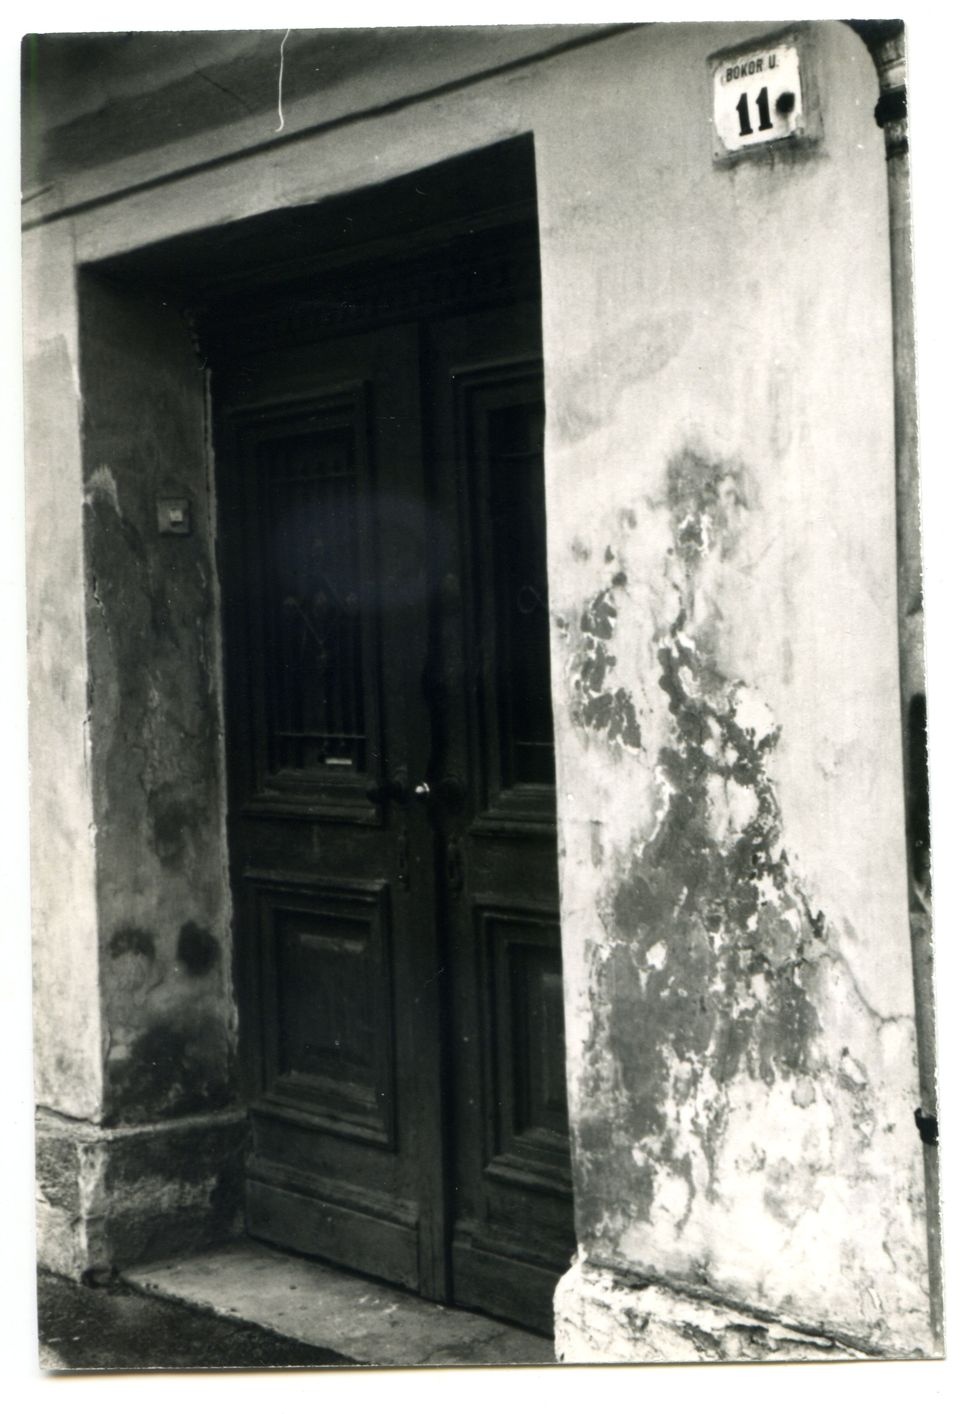 Épület romos utcafronti bejárata (Óbudai Múzeum CC BY-NC-SA)